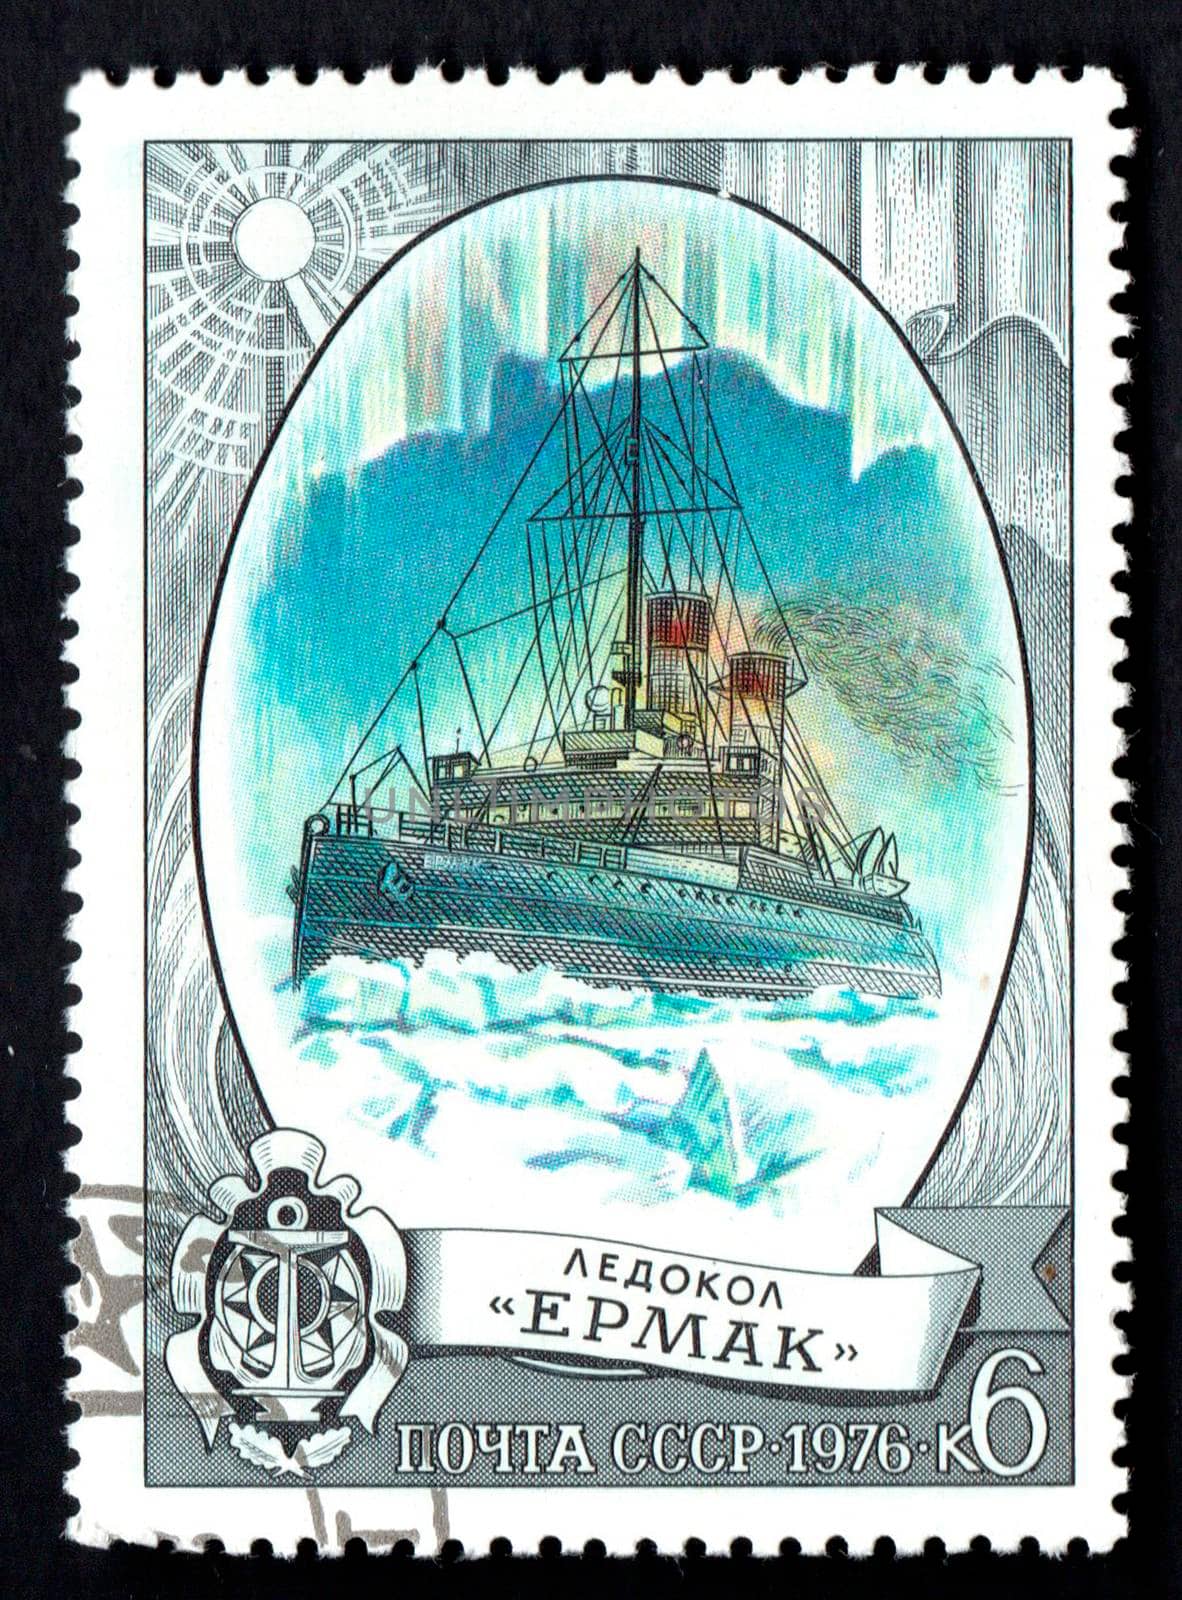 Icebreaker Ermak imaged on isolated Soviet postage stamp by alexmak